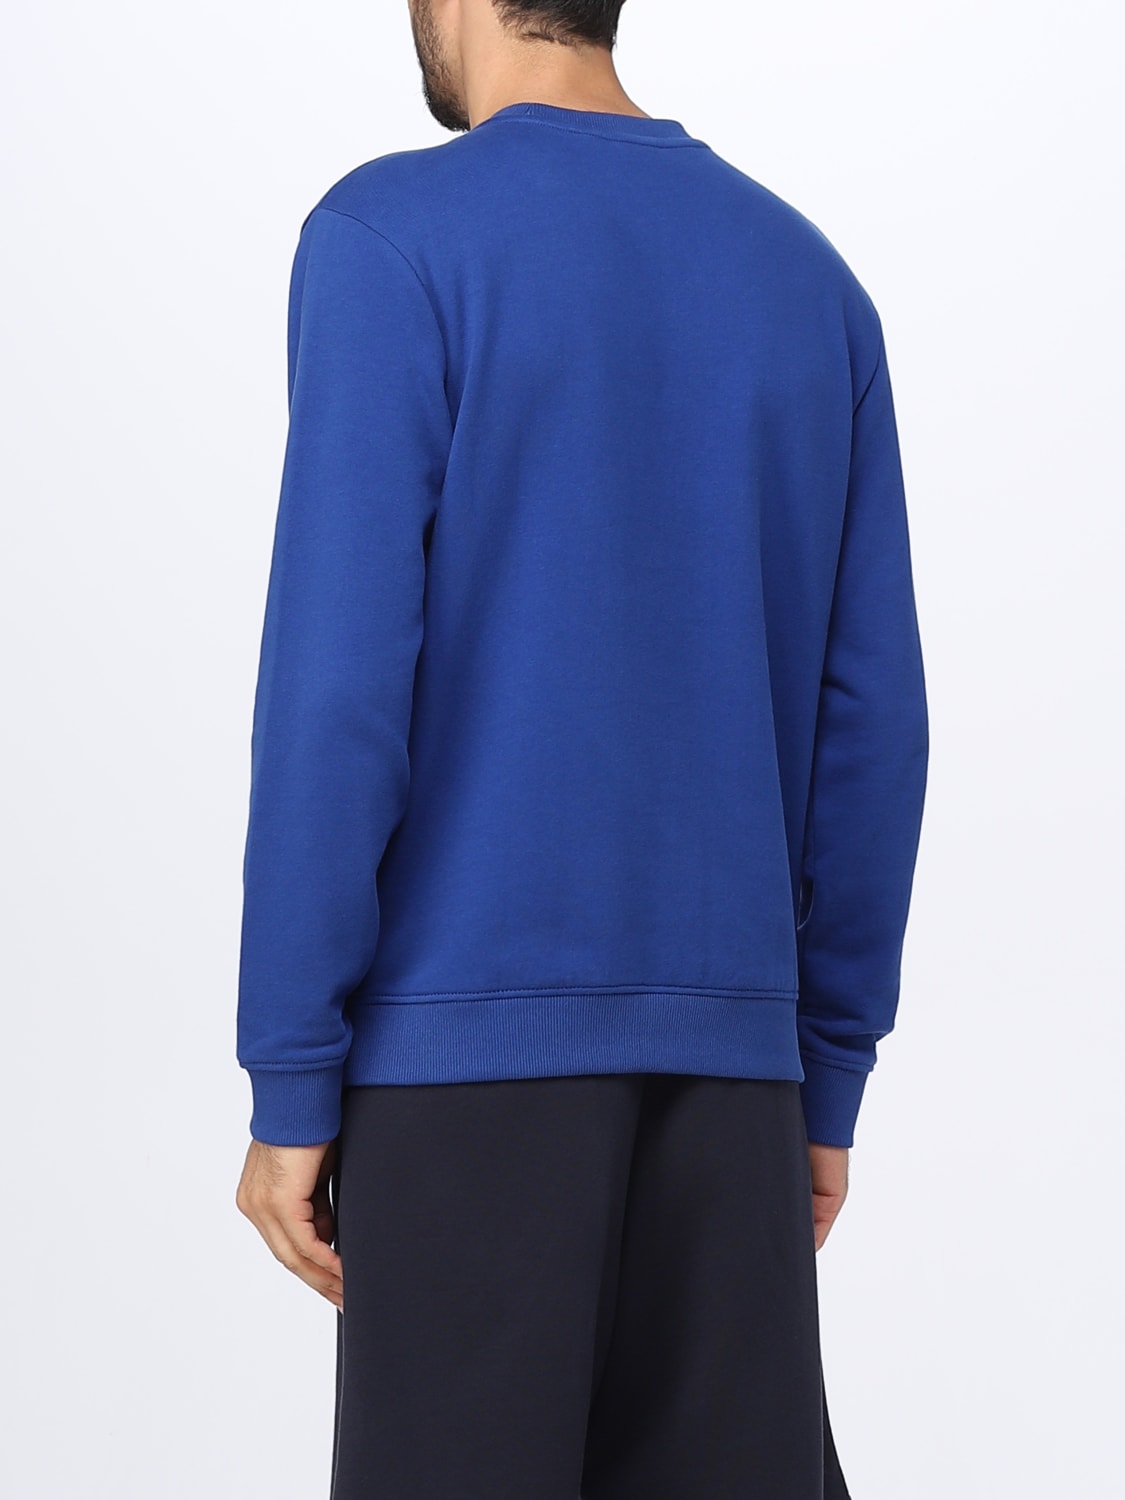 NAPAPIJRI: sweater for man - Blue | Napapijri sweater NP0A4H89 online ...